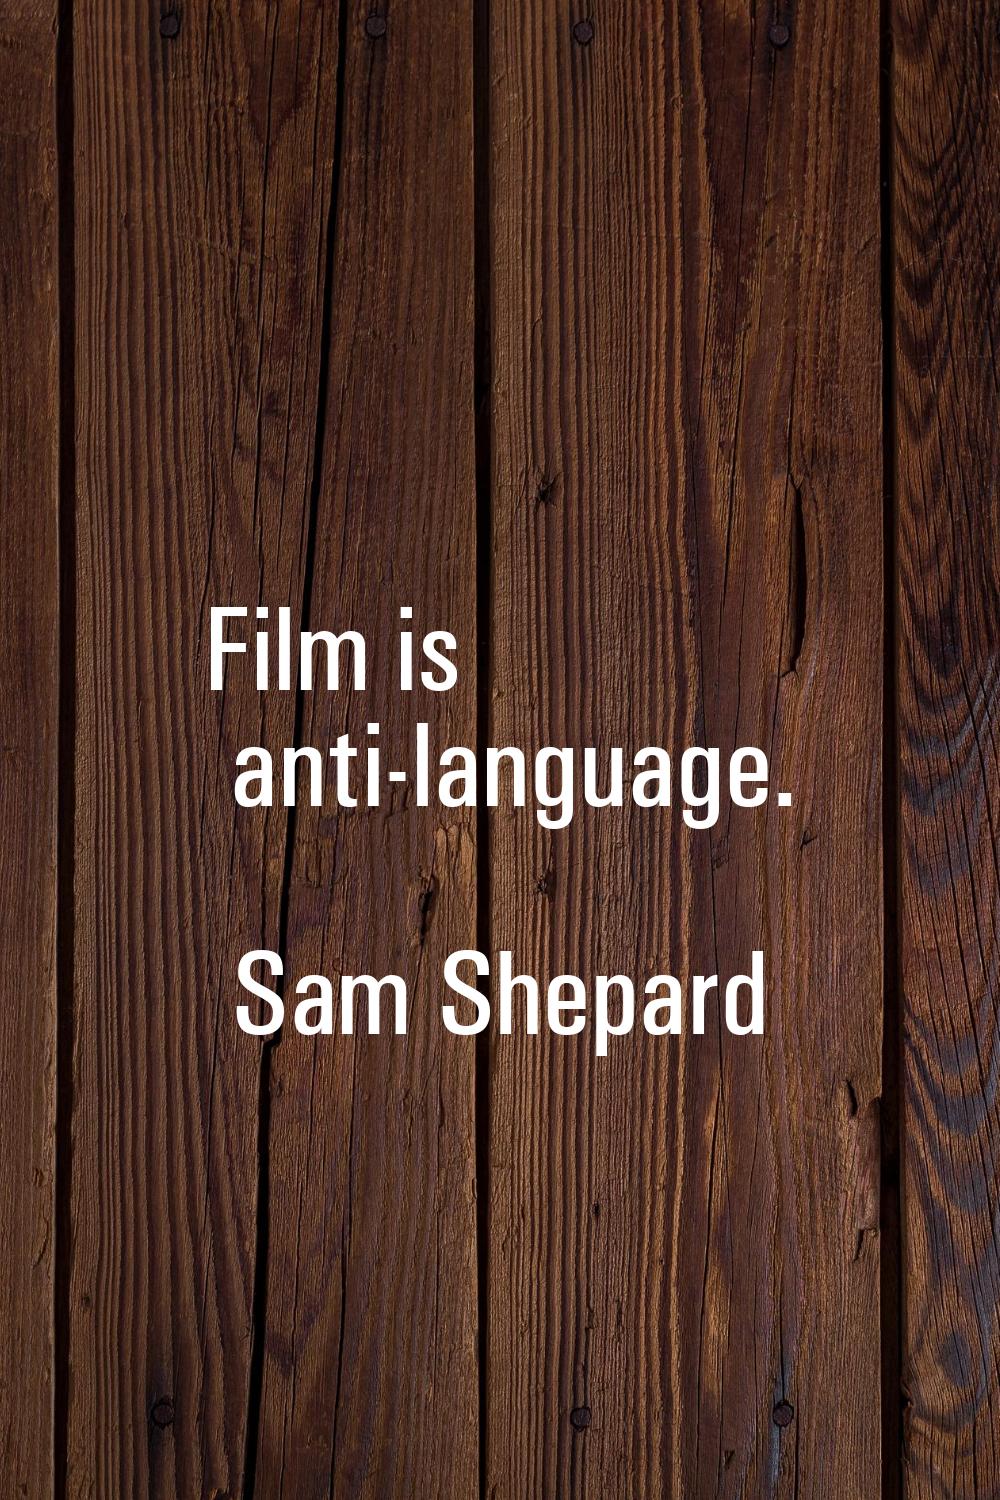 Film is anti-language.